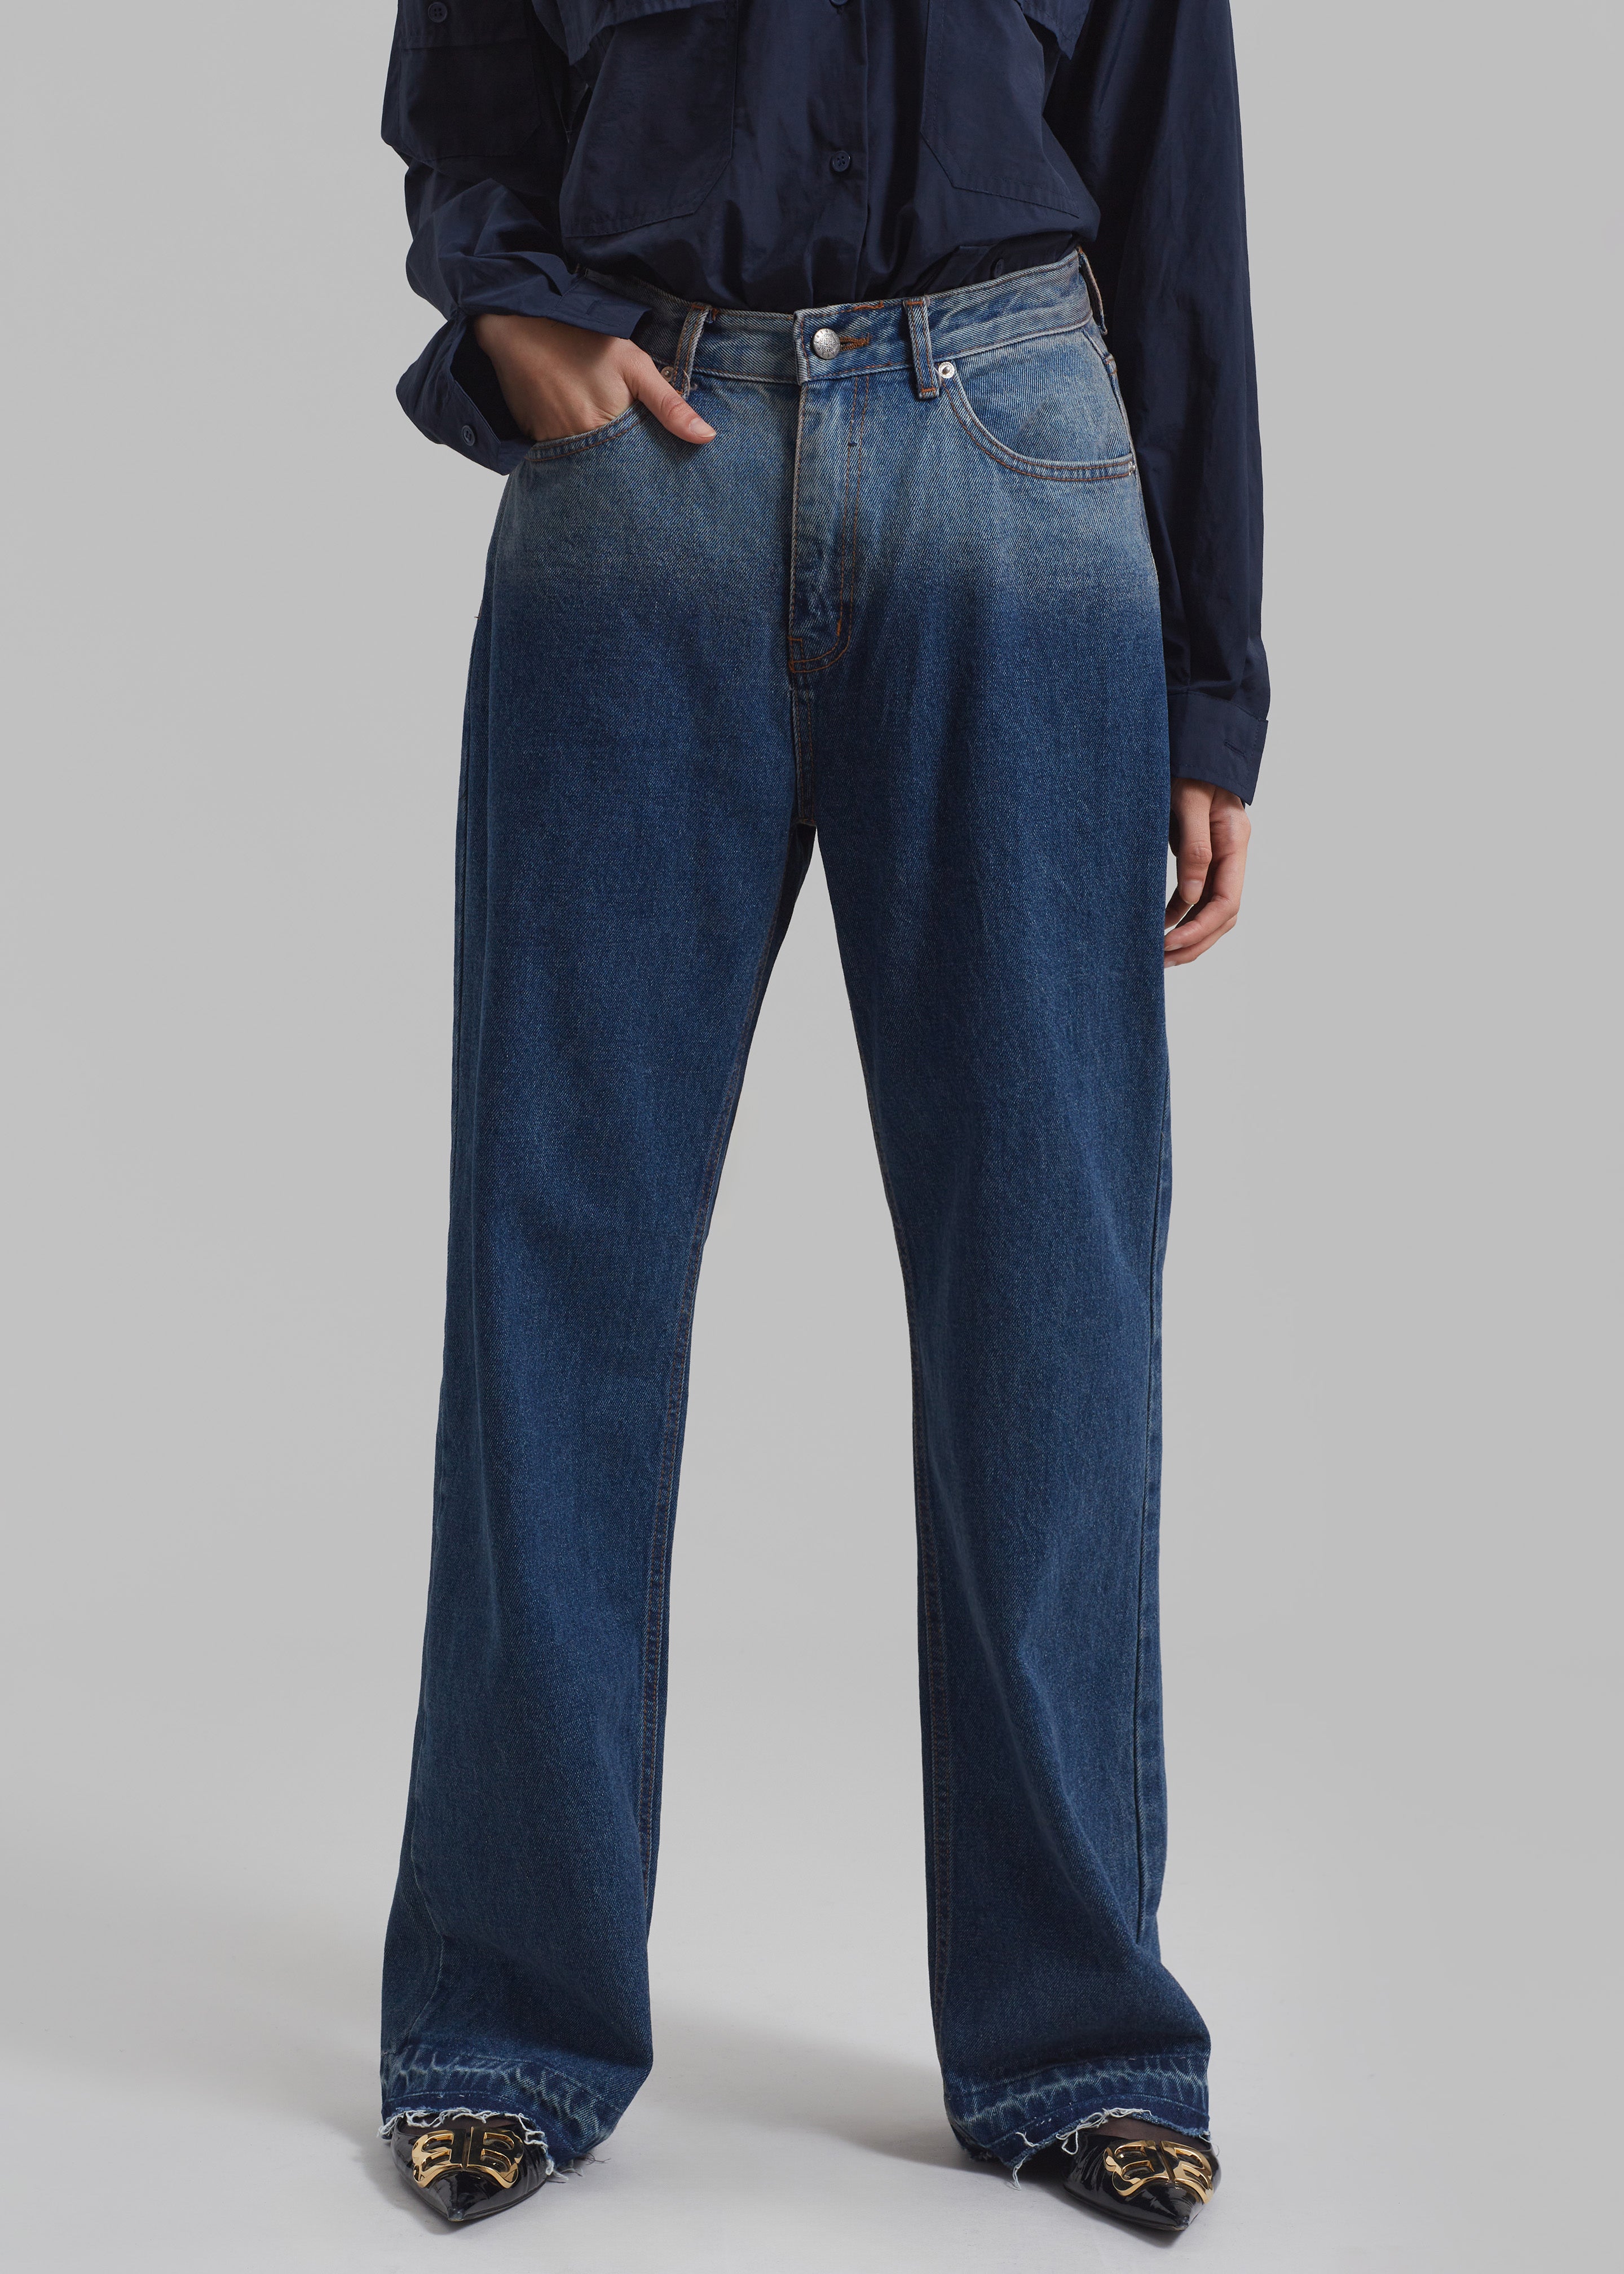 Myla Ombre Jeans - Medium Wash - 7